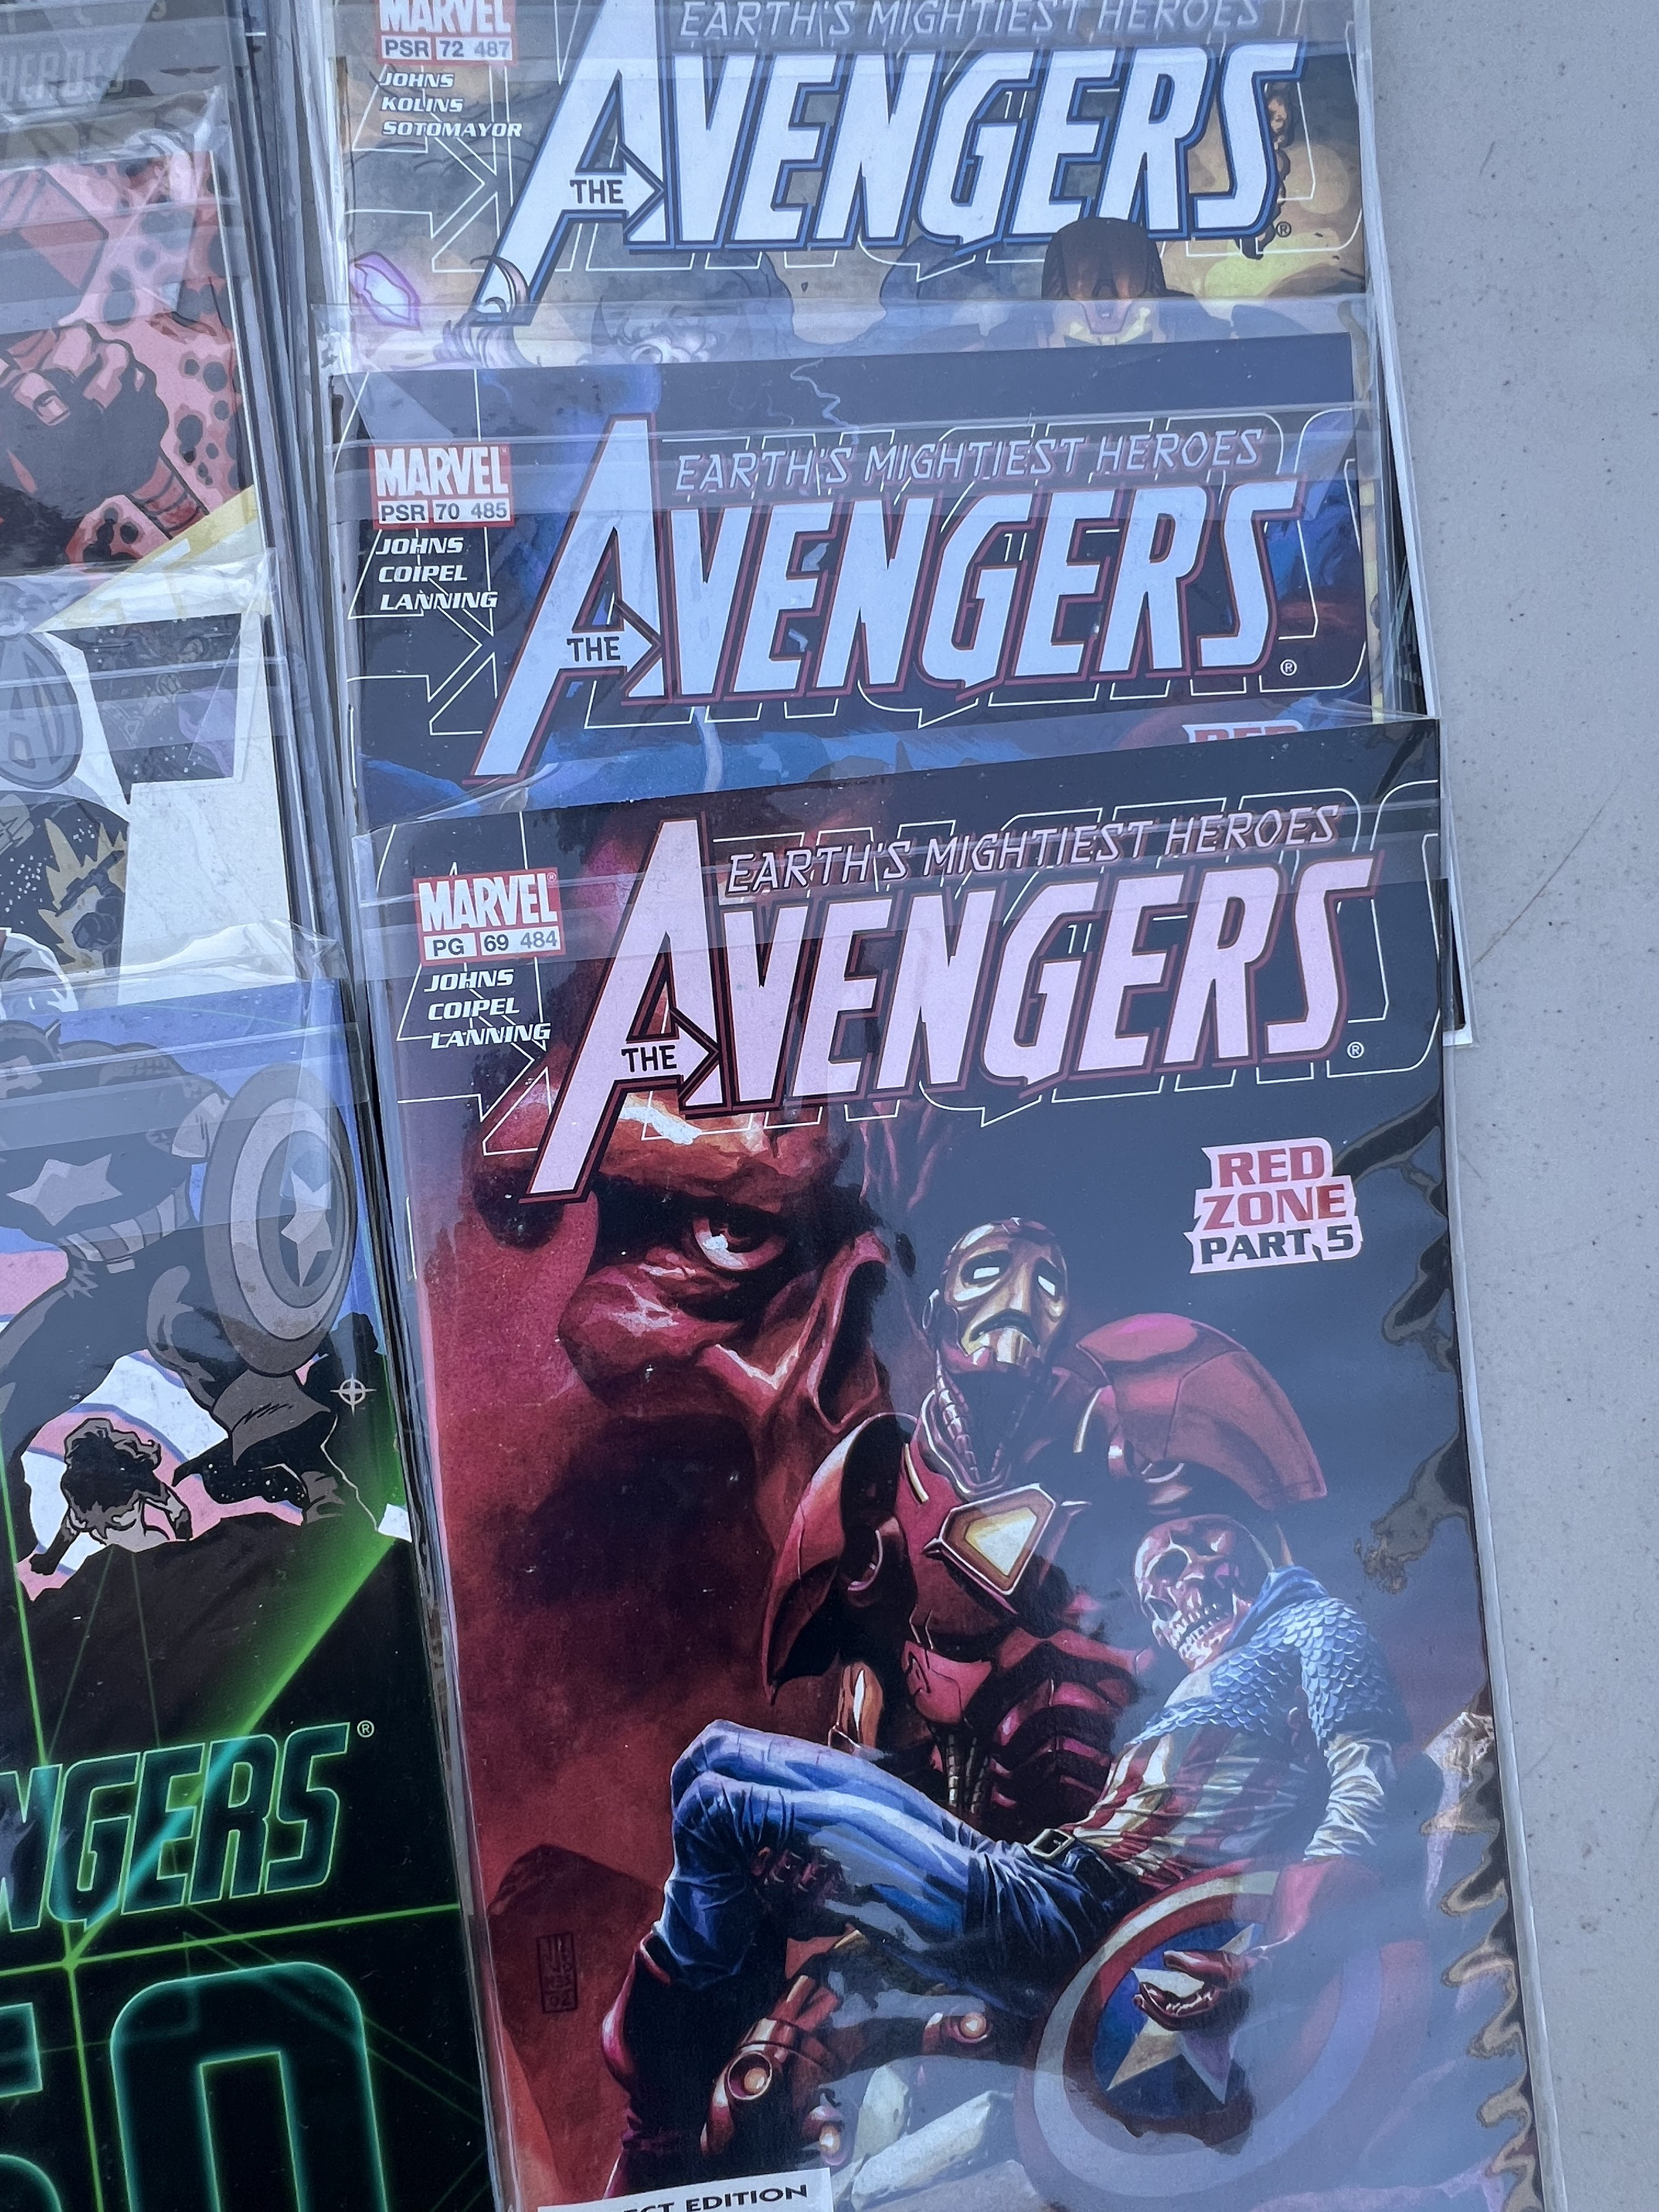 Comic Book Avengers collection lot 25 Marvel comics